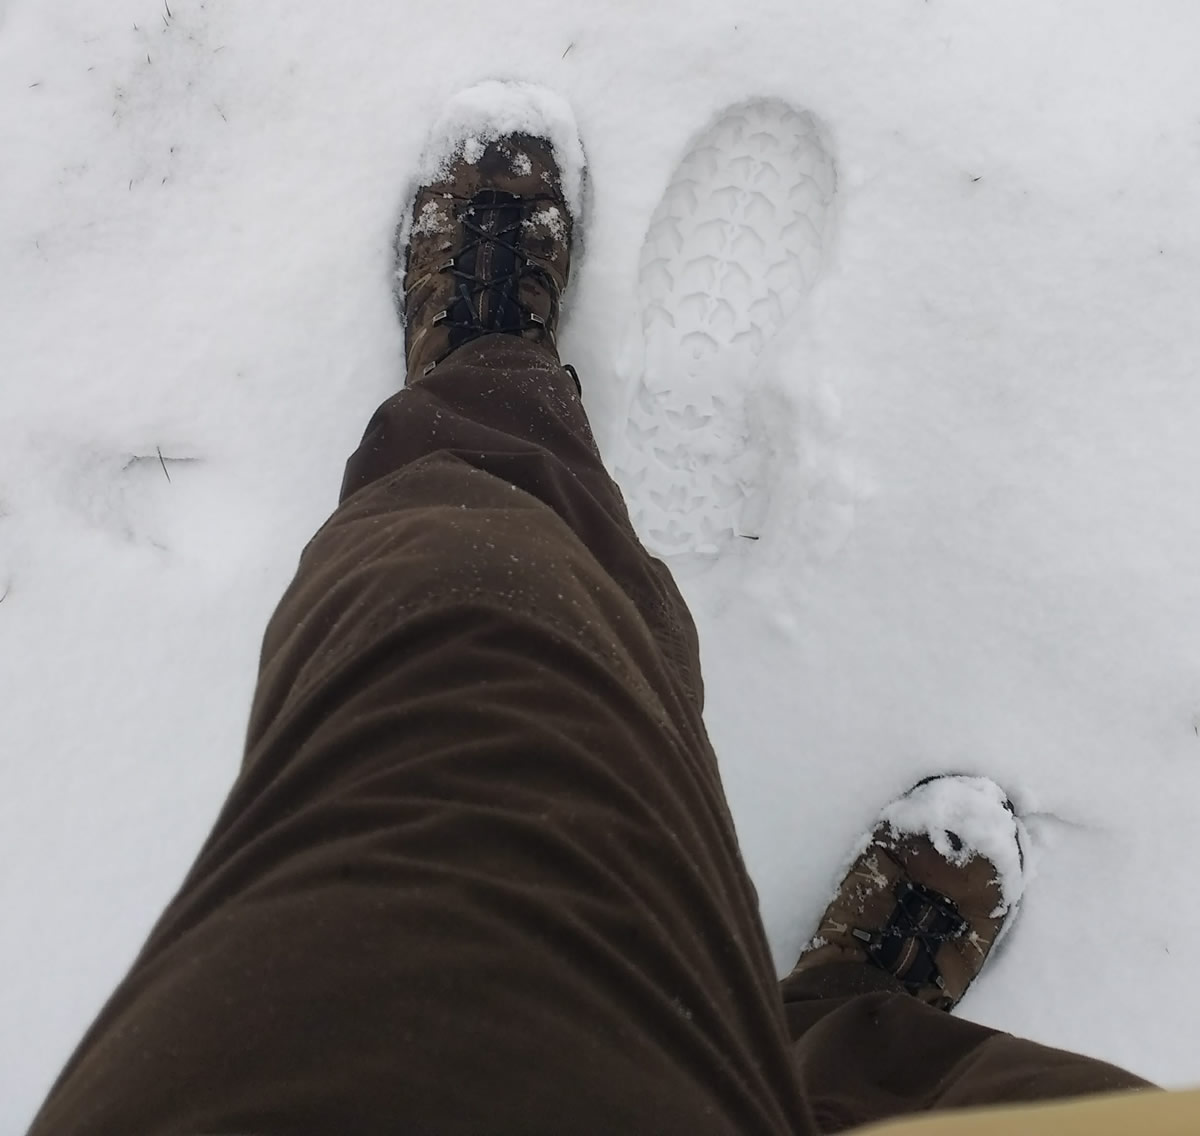 snowy salomon hiking boot test